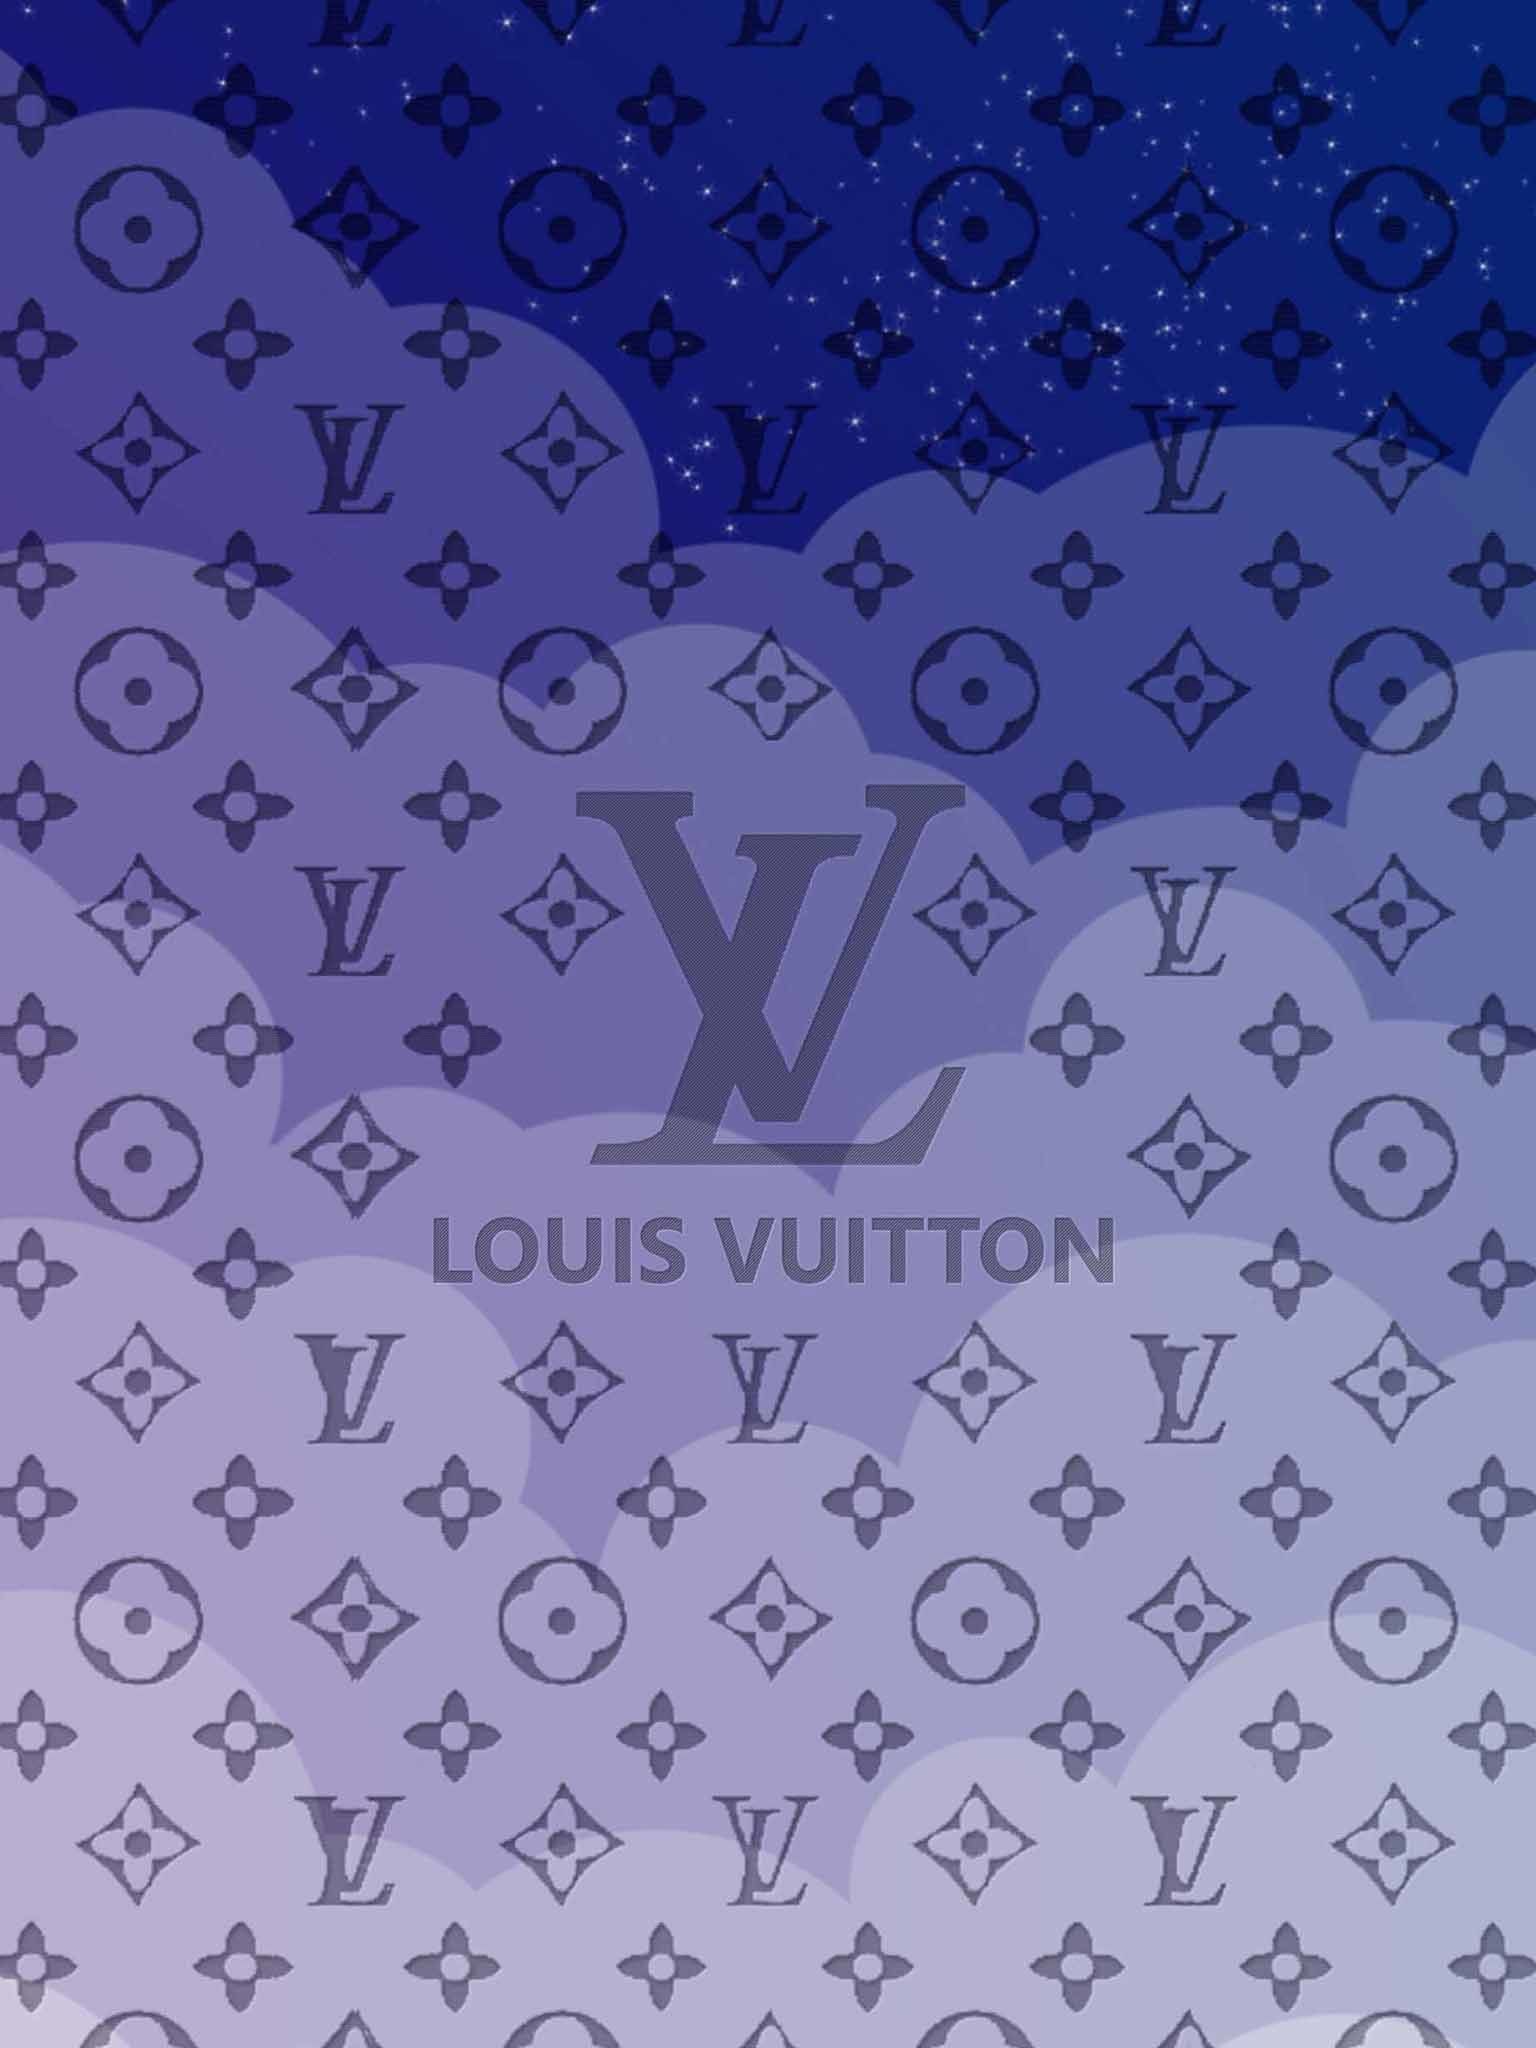 Louis Vuitton Background  Louis vuitton background, Louis vuitton iphone  wallpaper, Iphone wallpaper vintage